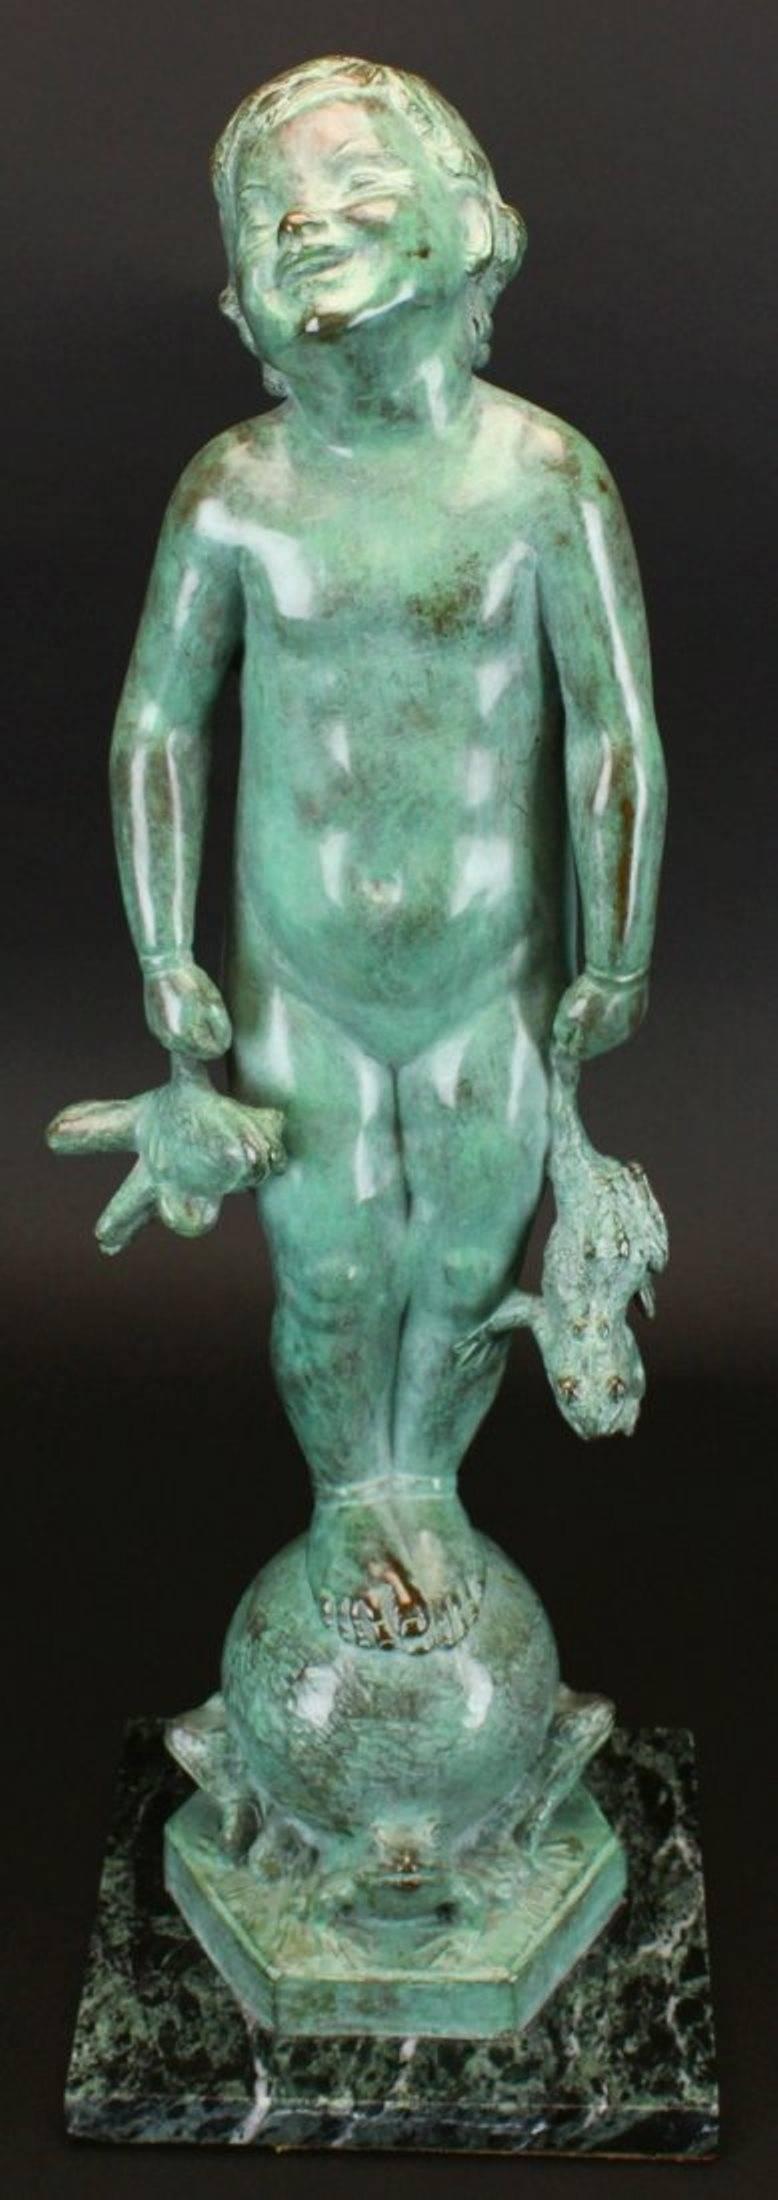 frog baby statue